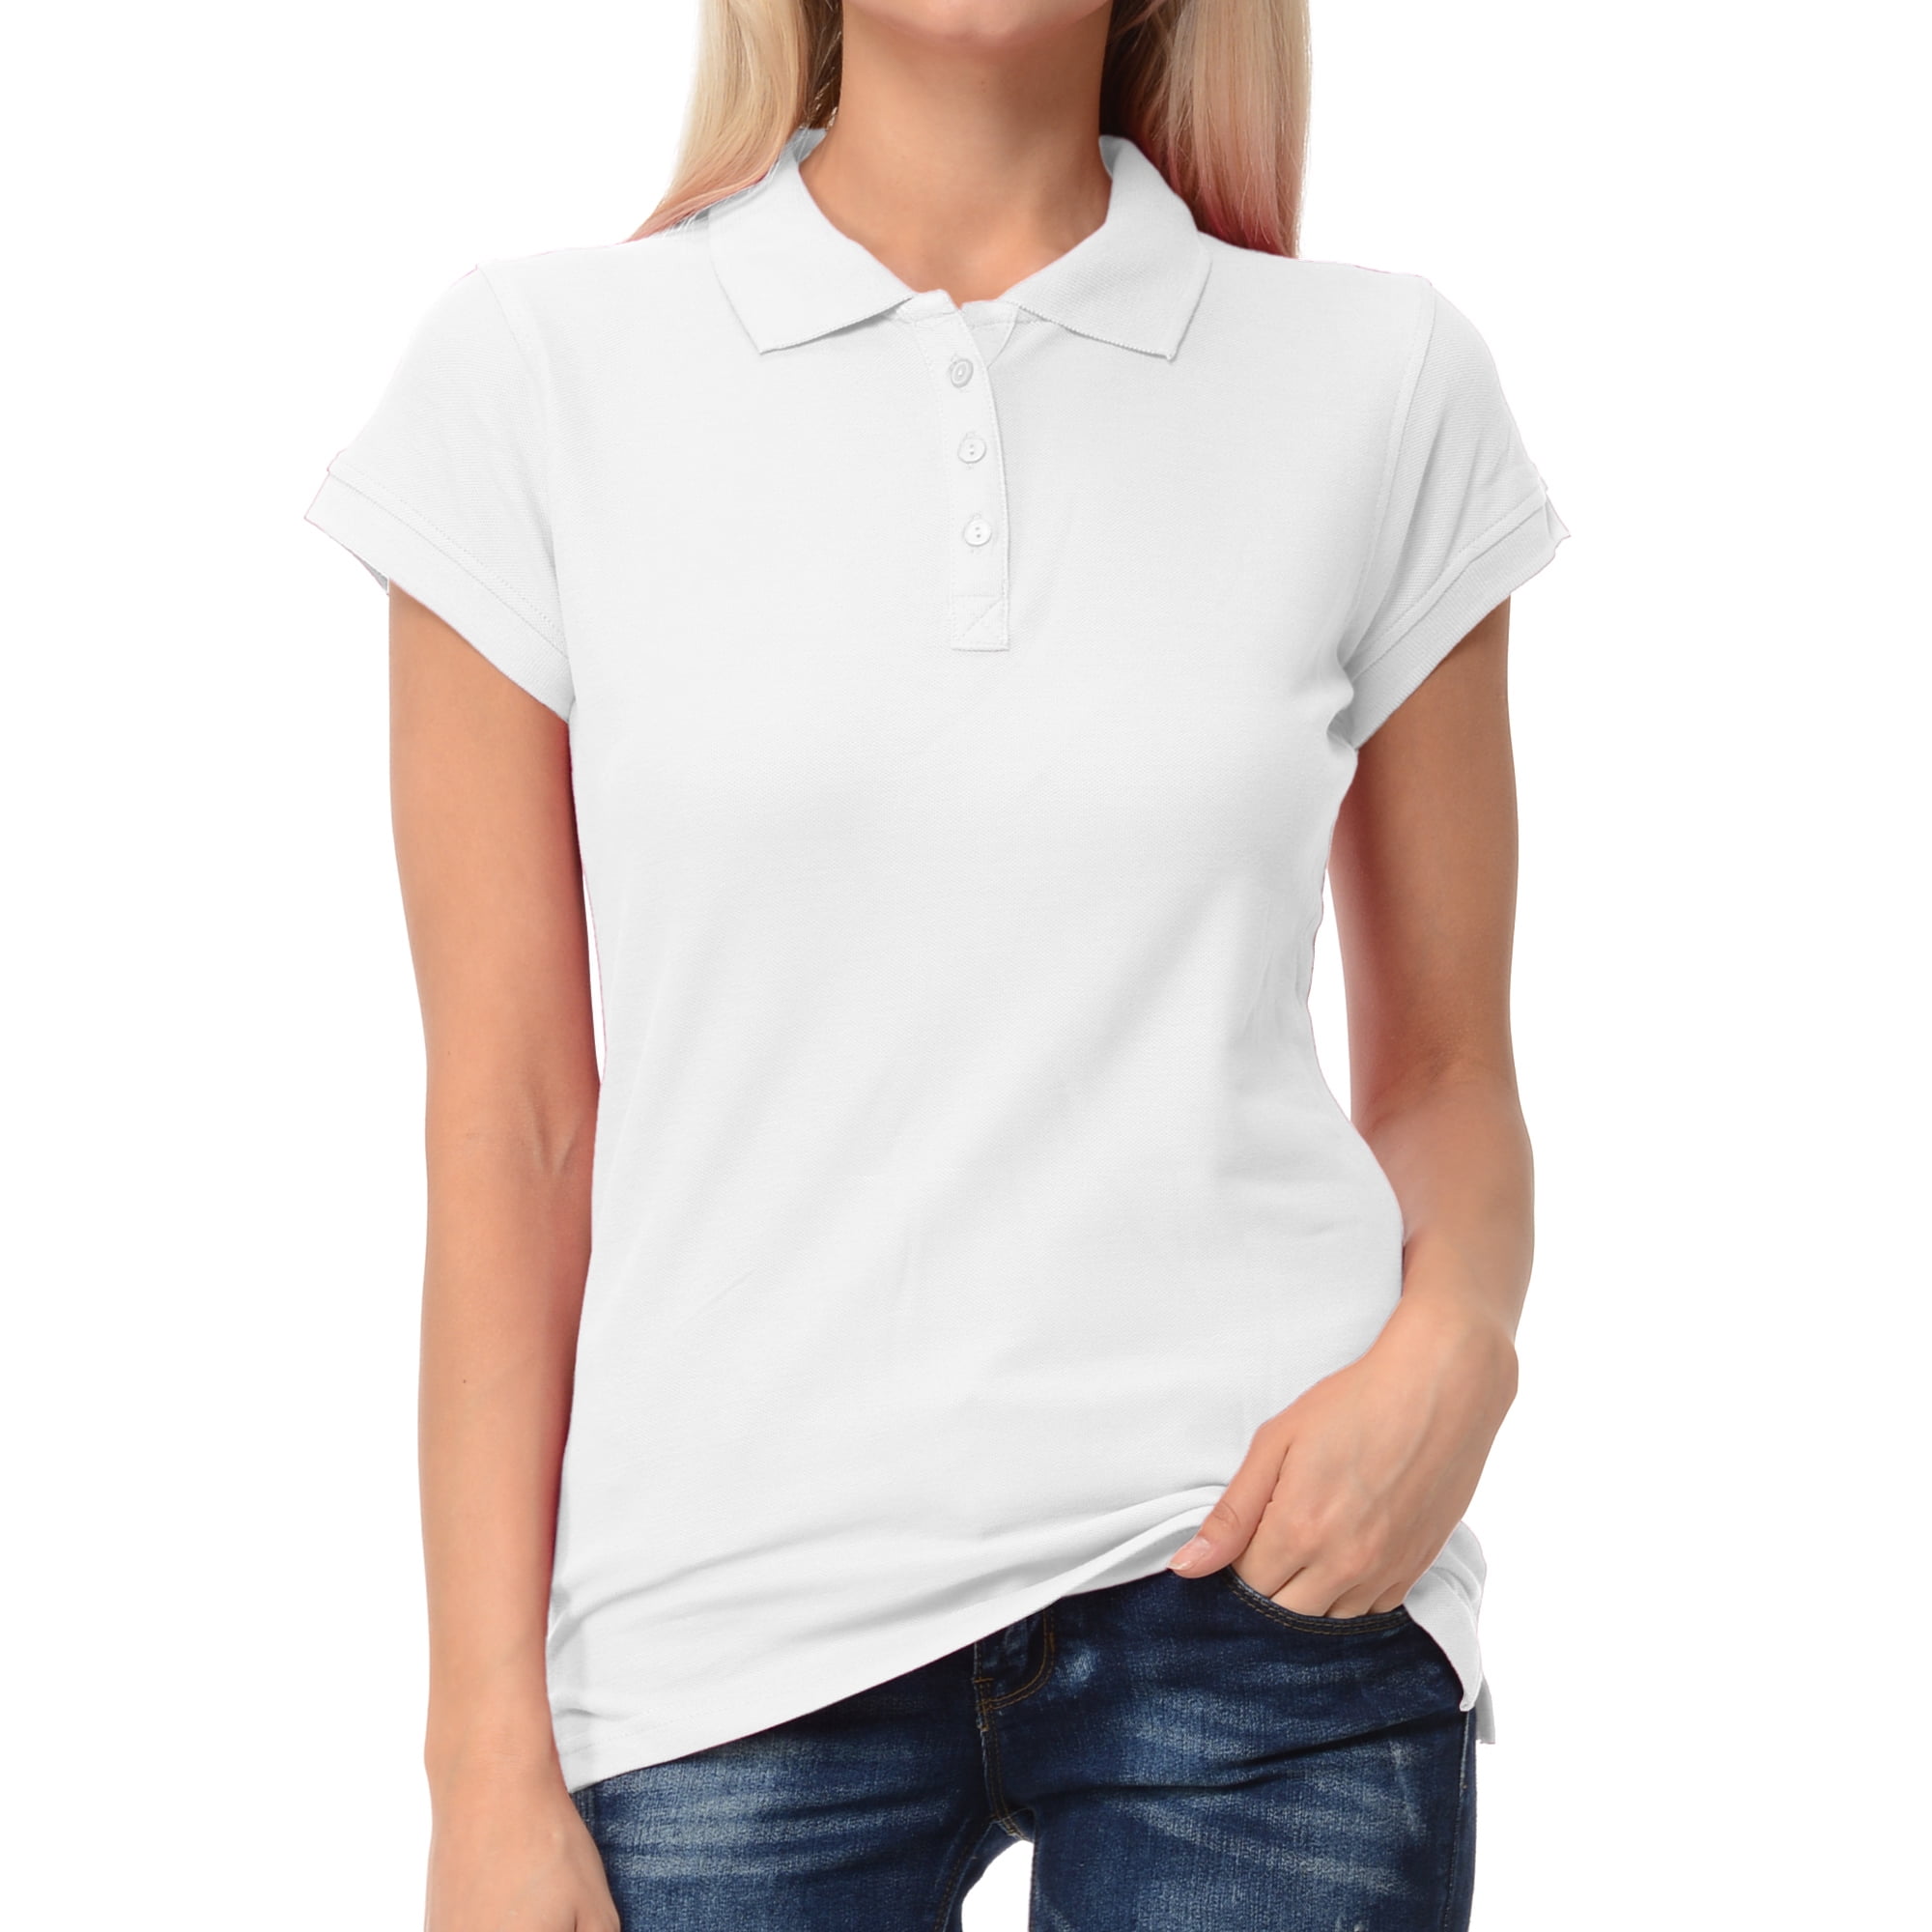 Basico Women Junior's Short Sleeve Fit Shirt 100% Cotton -